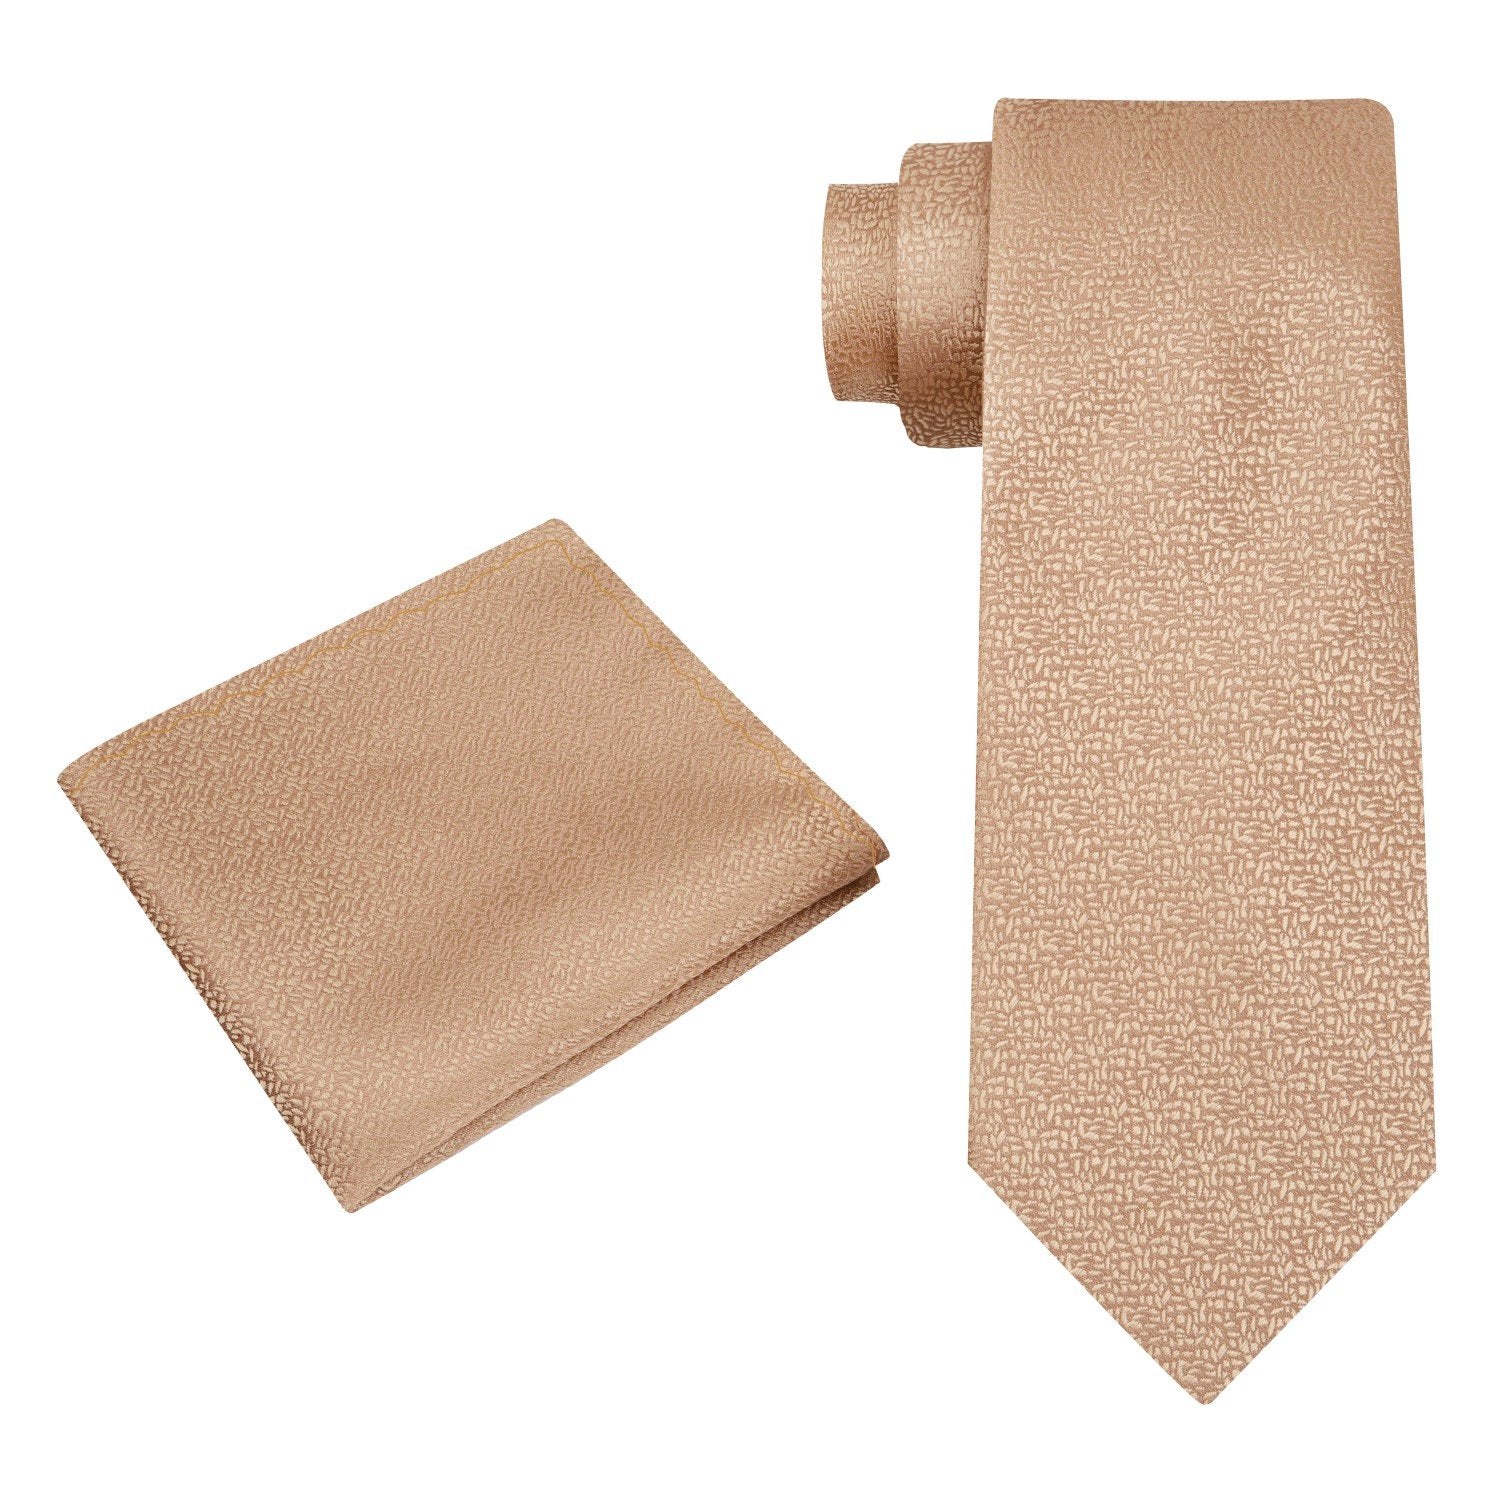 Alt View: A Solid Golden Shimmer Pattern Silk Necktie, Matching Pocket Square